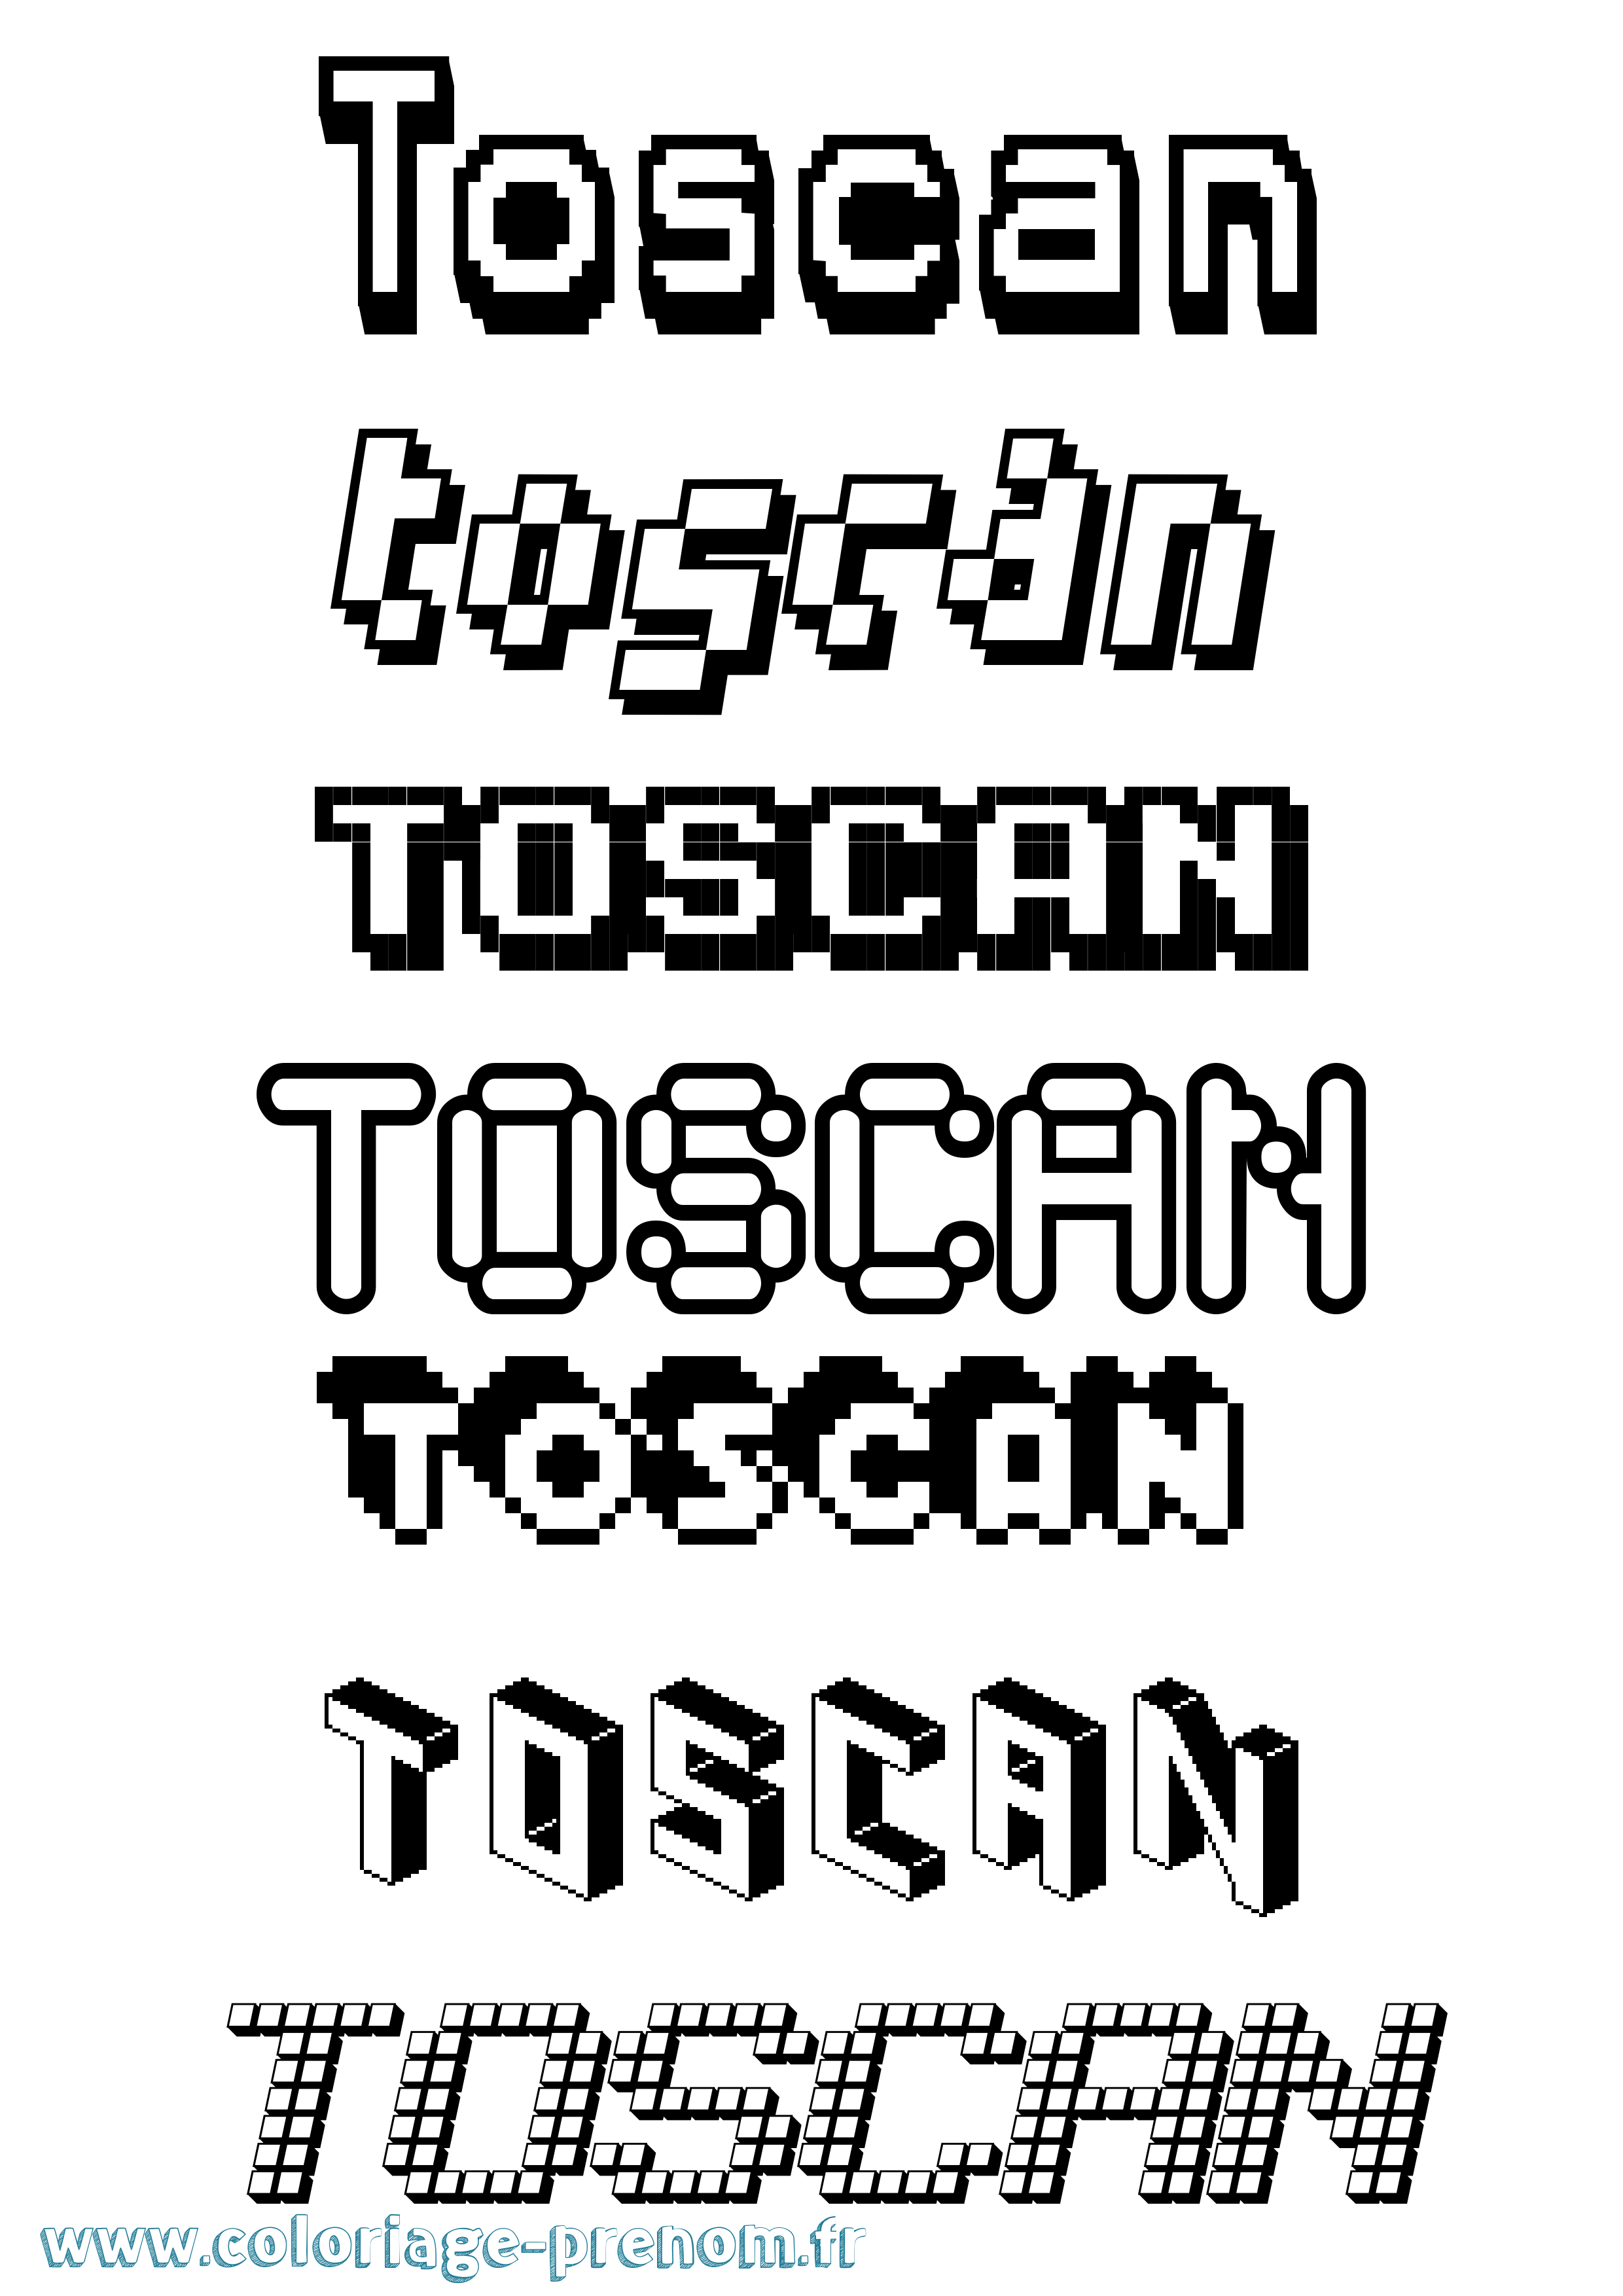 Coloriage prénom Toscan Pixel